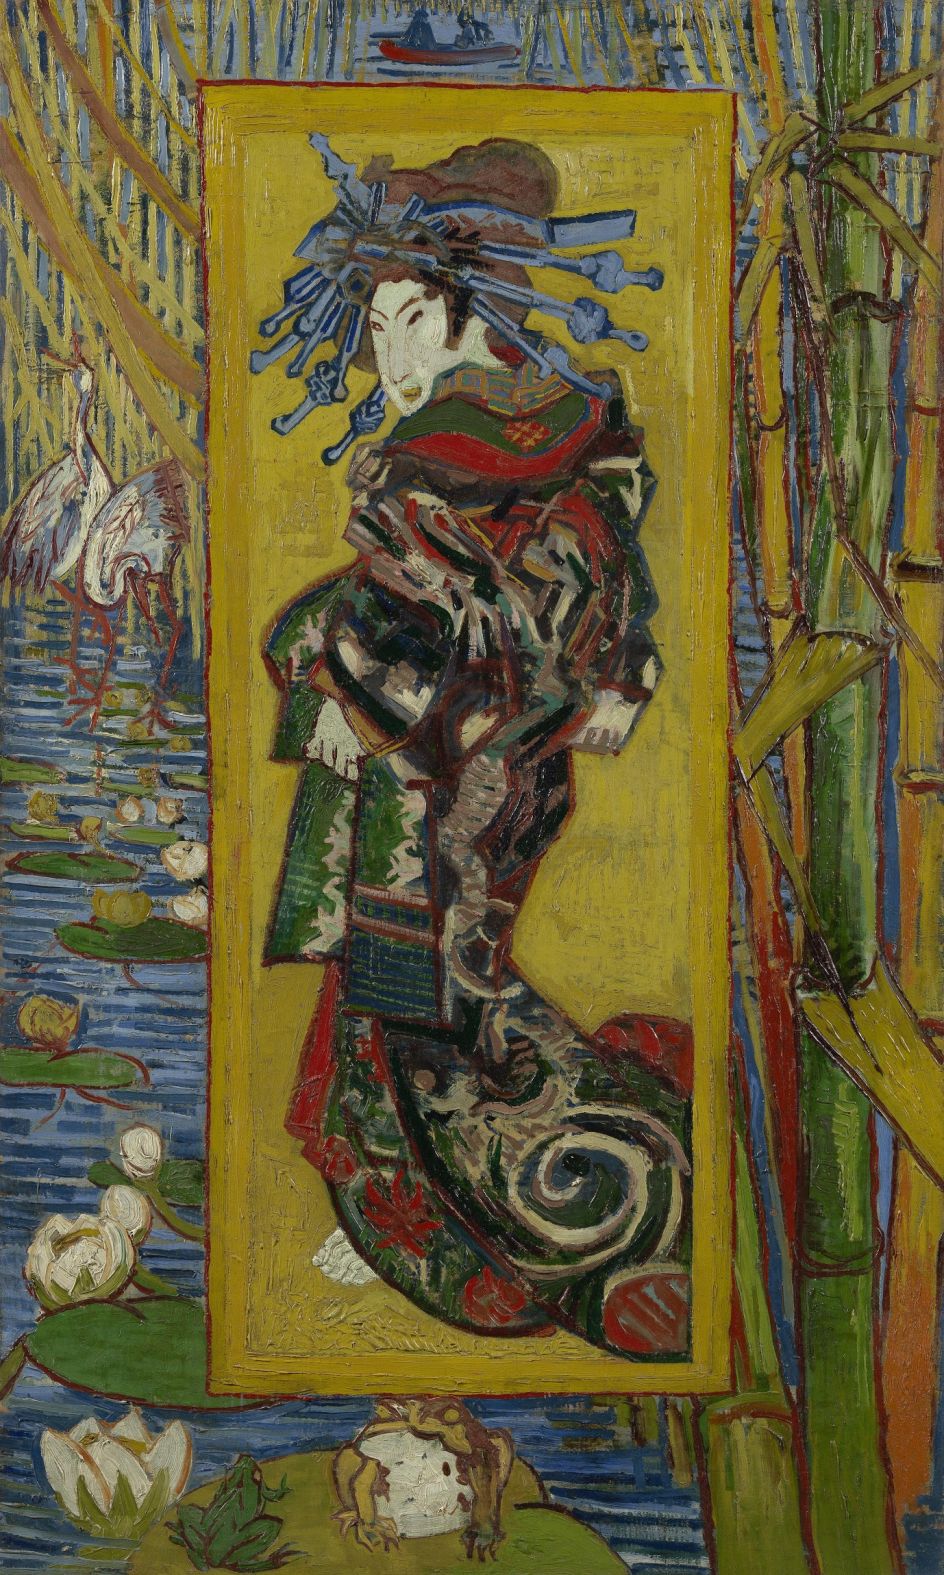 Courtesan (after Eisen). Vincent van Gogh (1853 - 1890), Paris, October-November 1887. Credit: Van Gogh Museum, Amsterdam (Vincent van Gogh Foundation)